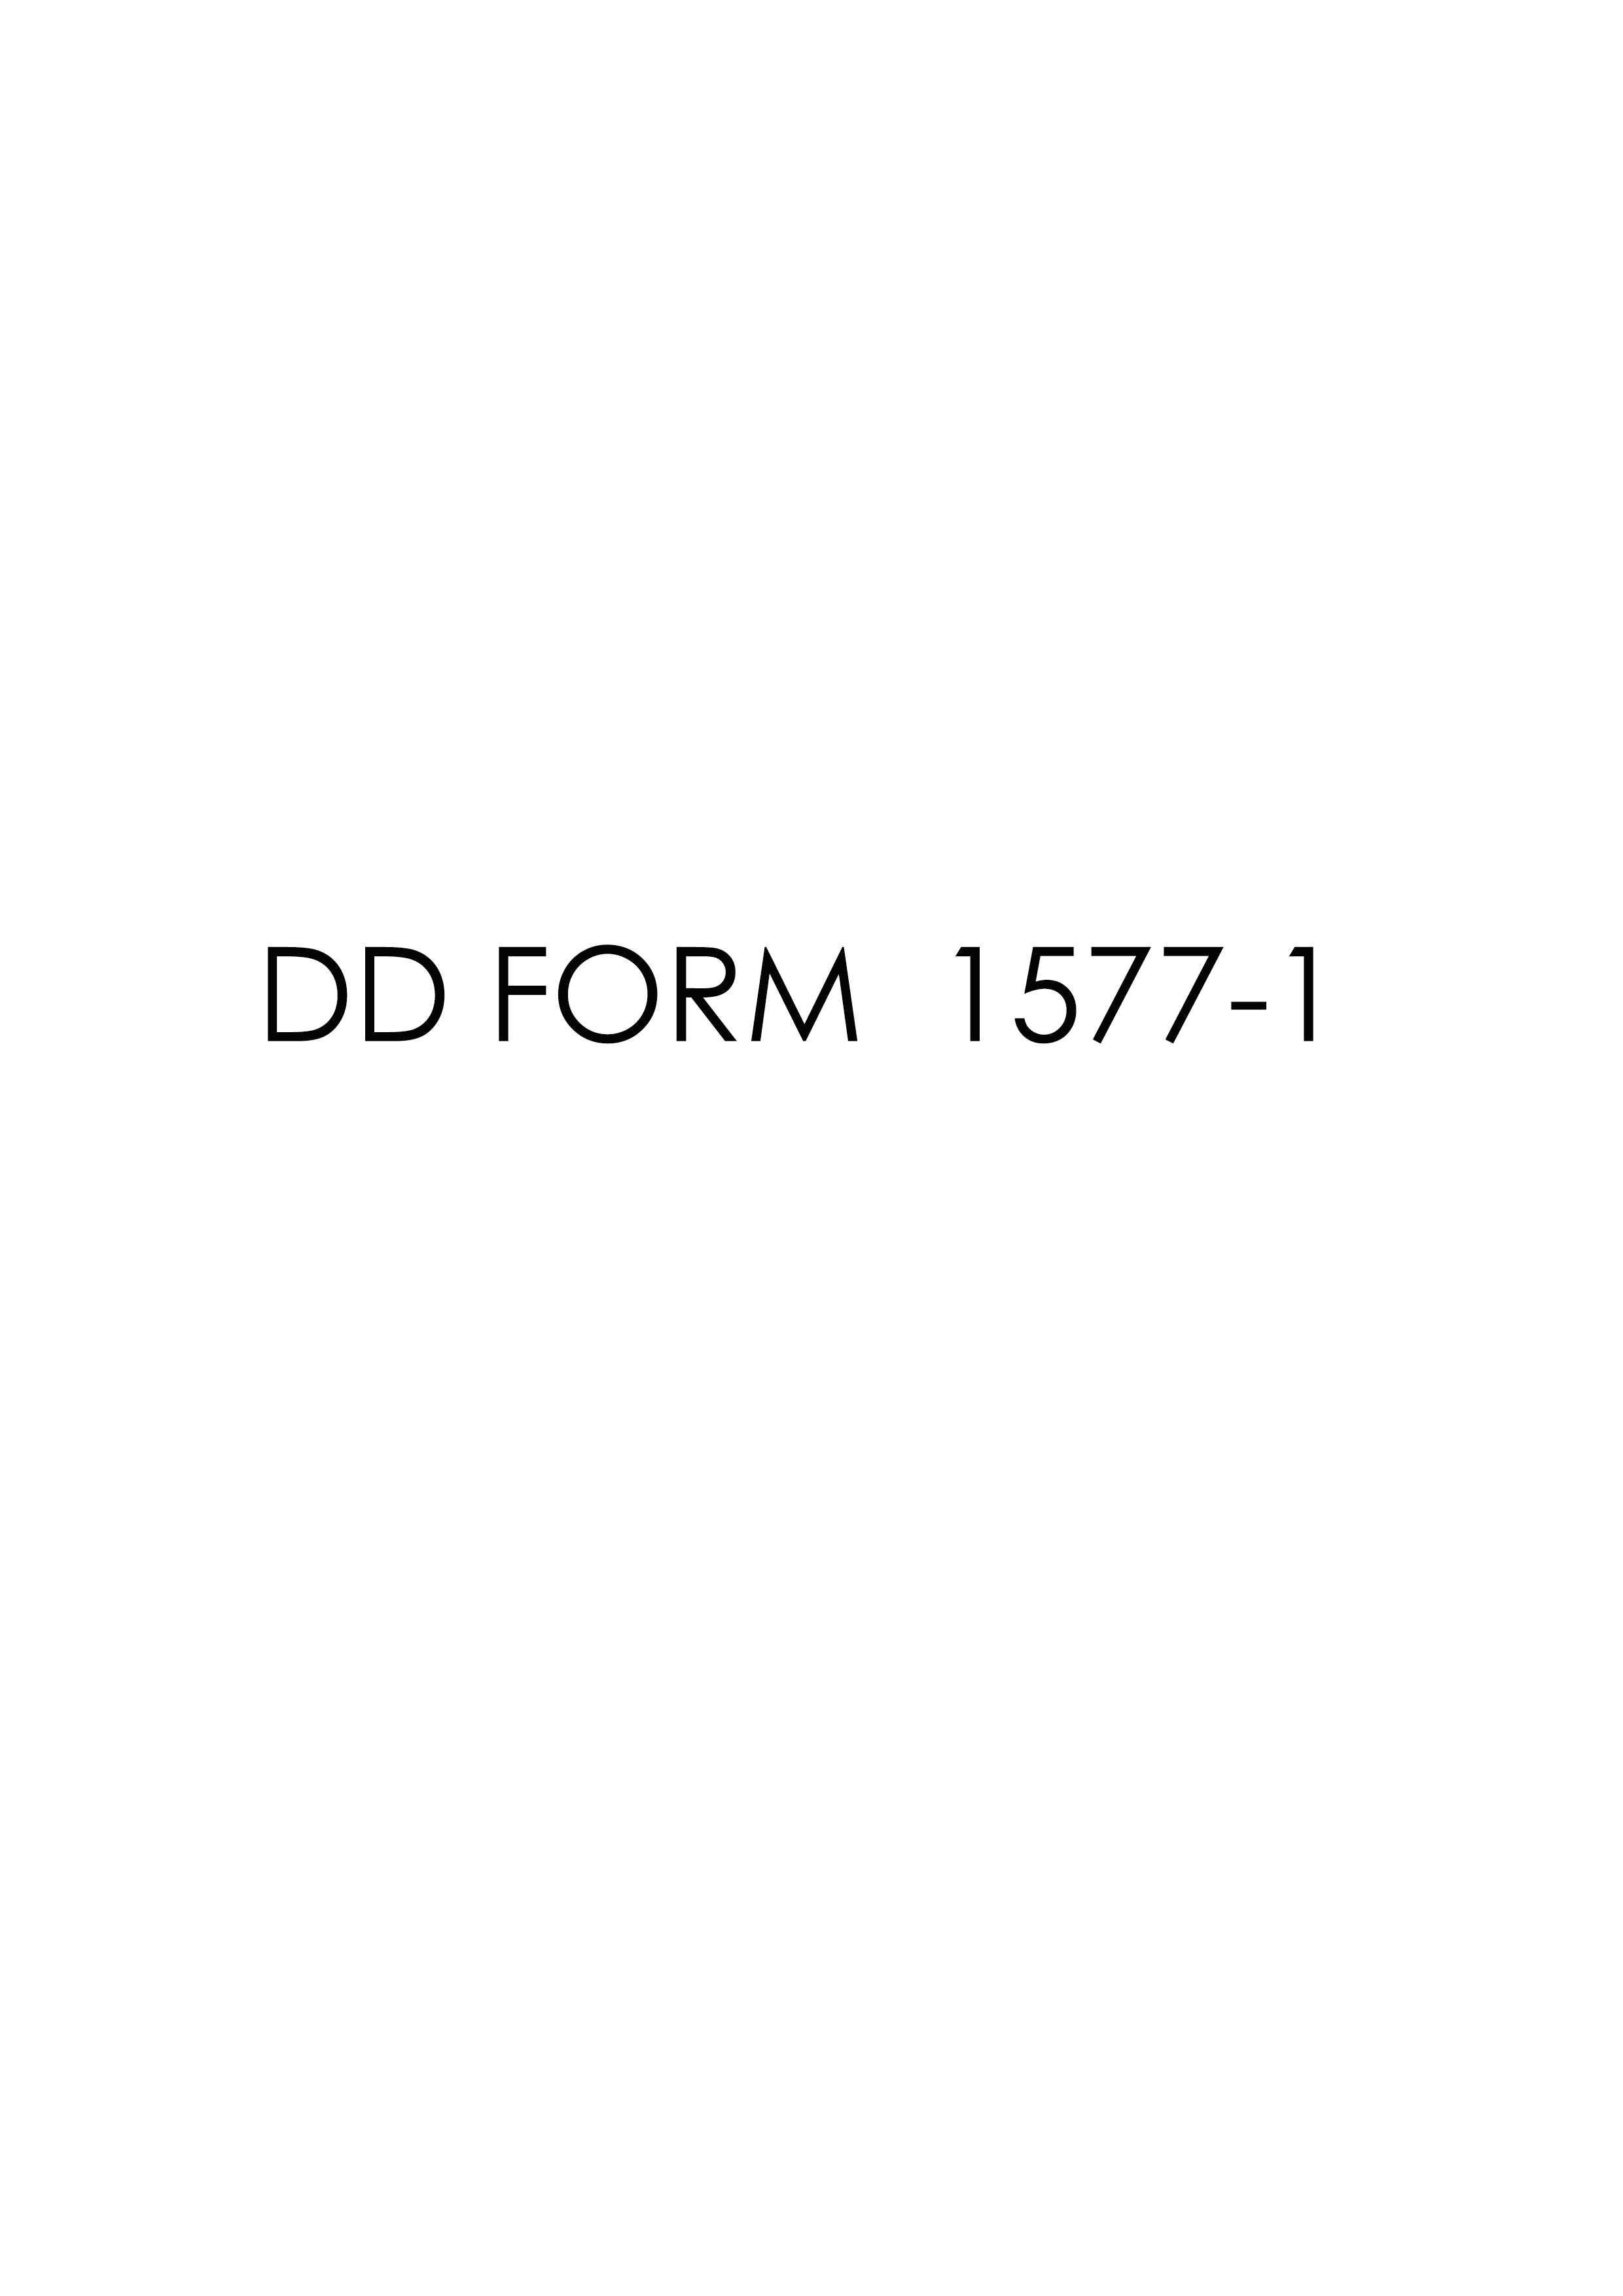 Download dd form 1577-1